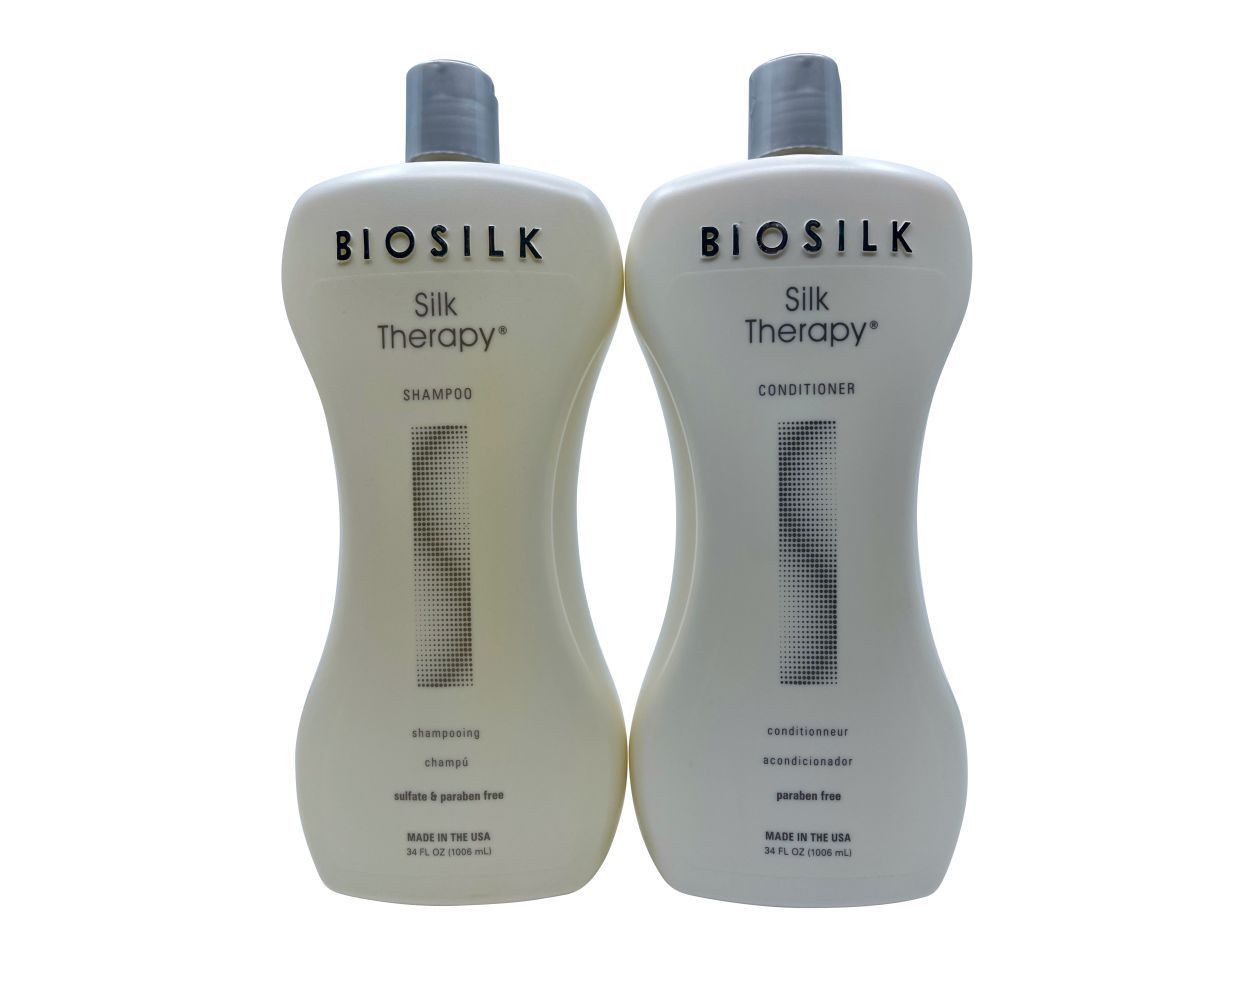 BIOSILK Silk Therapy Shampoo - wide 2